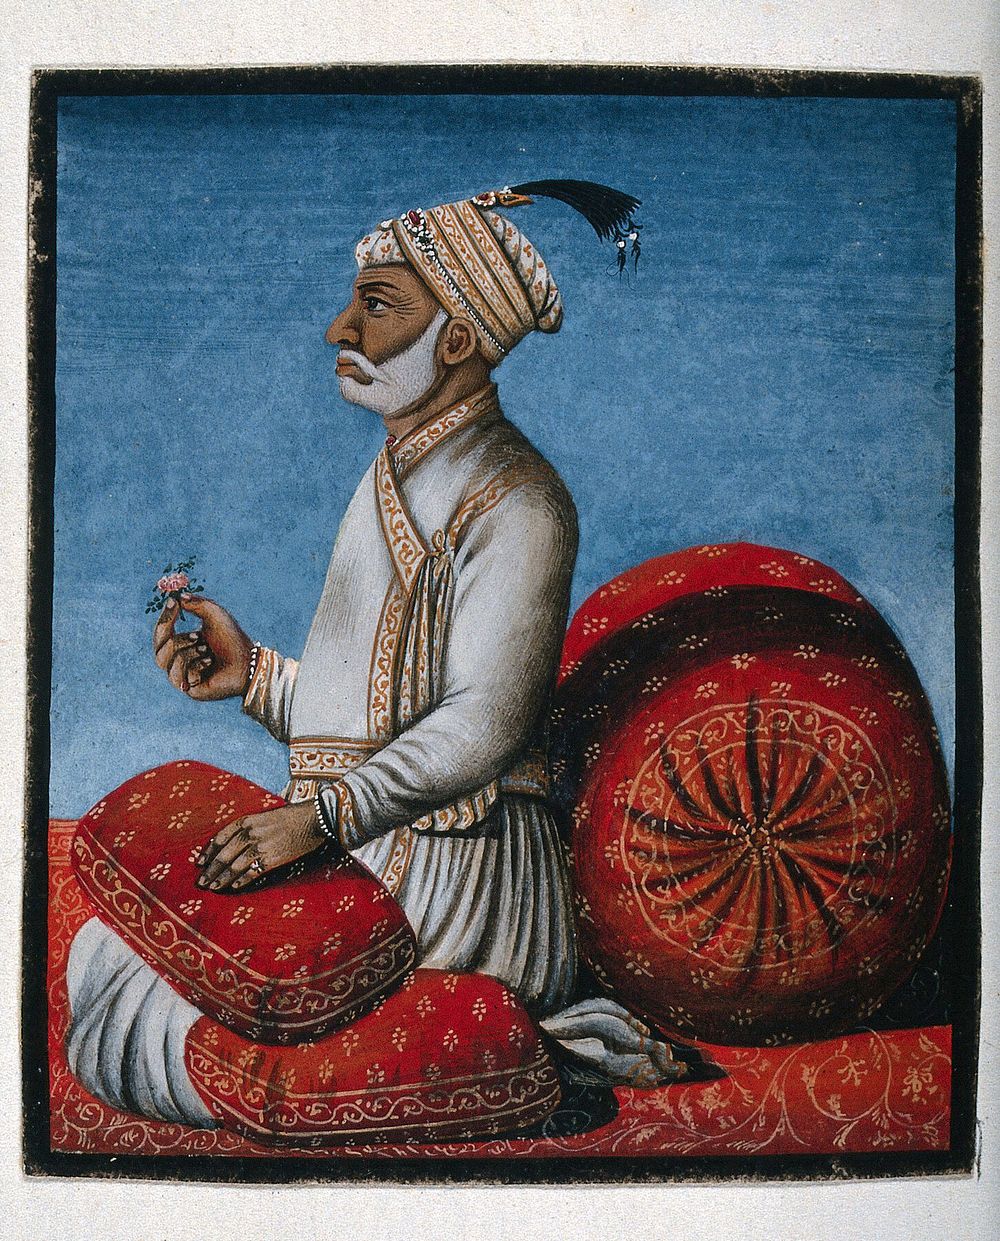 Rāja Jāyakī Rām. Gouache painting by an Indian artist.